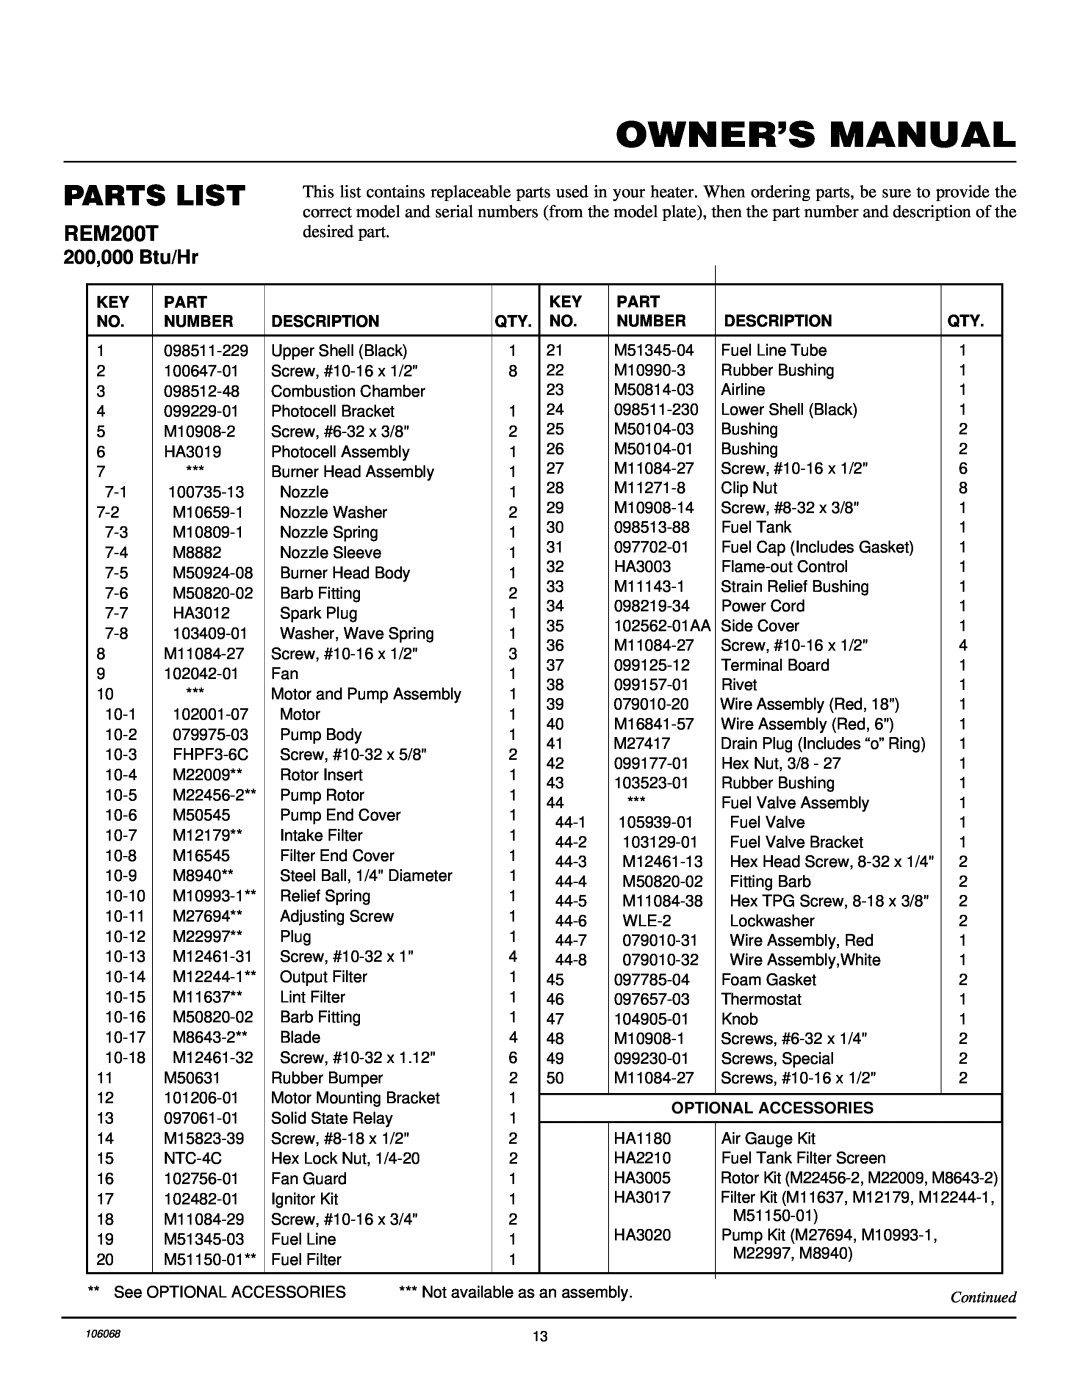 Desa REM200T owner manual Parts List, 200,000 Btu/Hr 